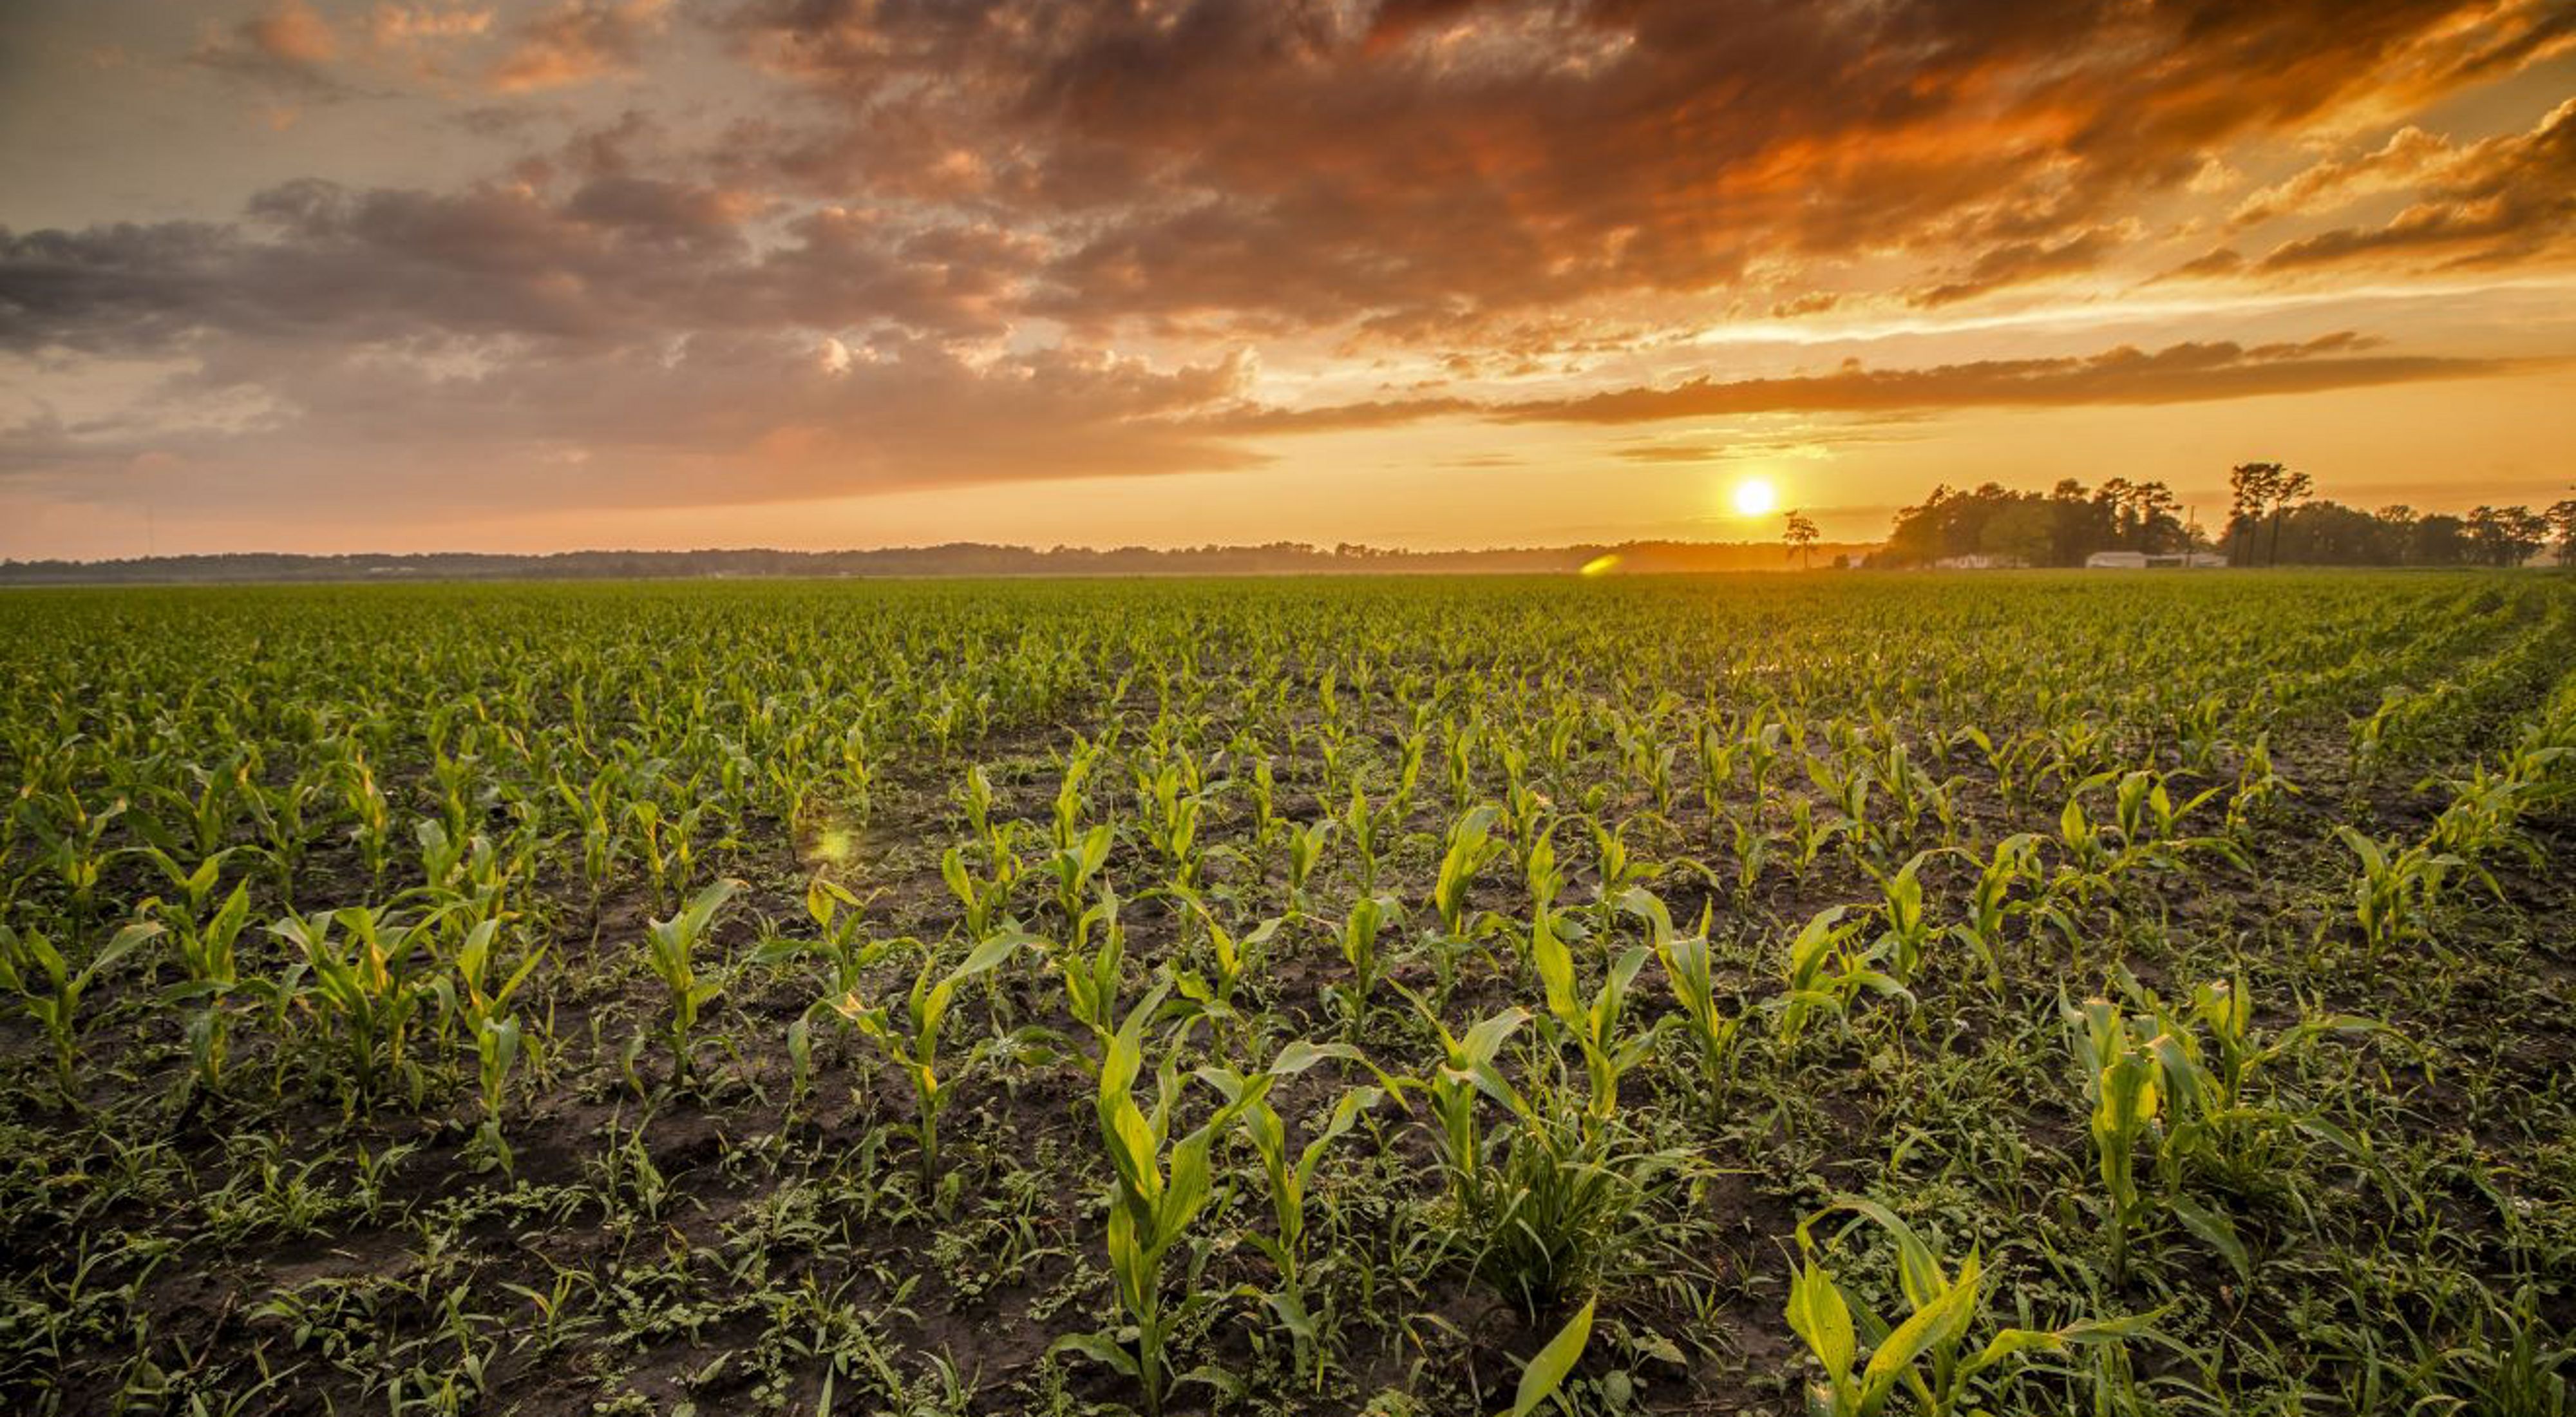 Sunset over corn fields.